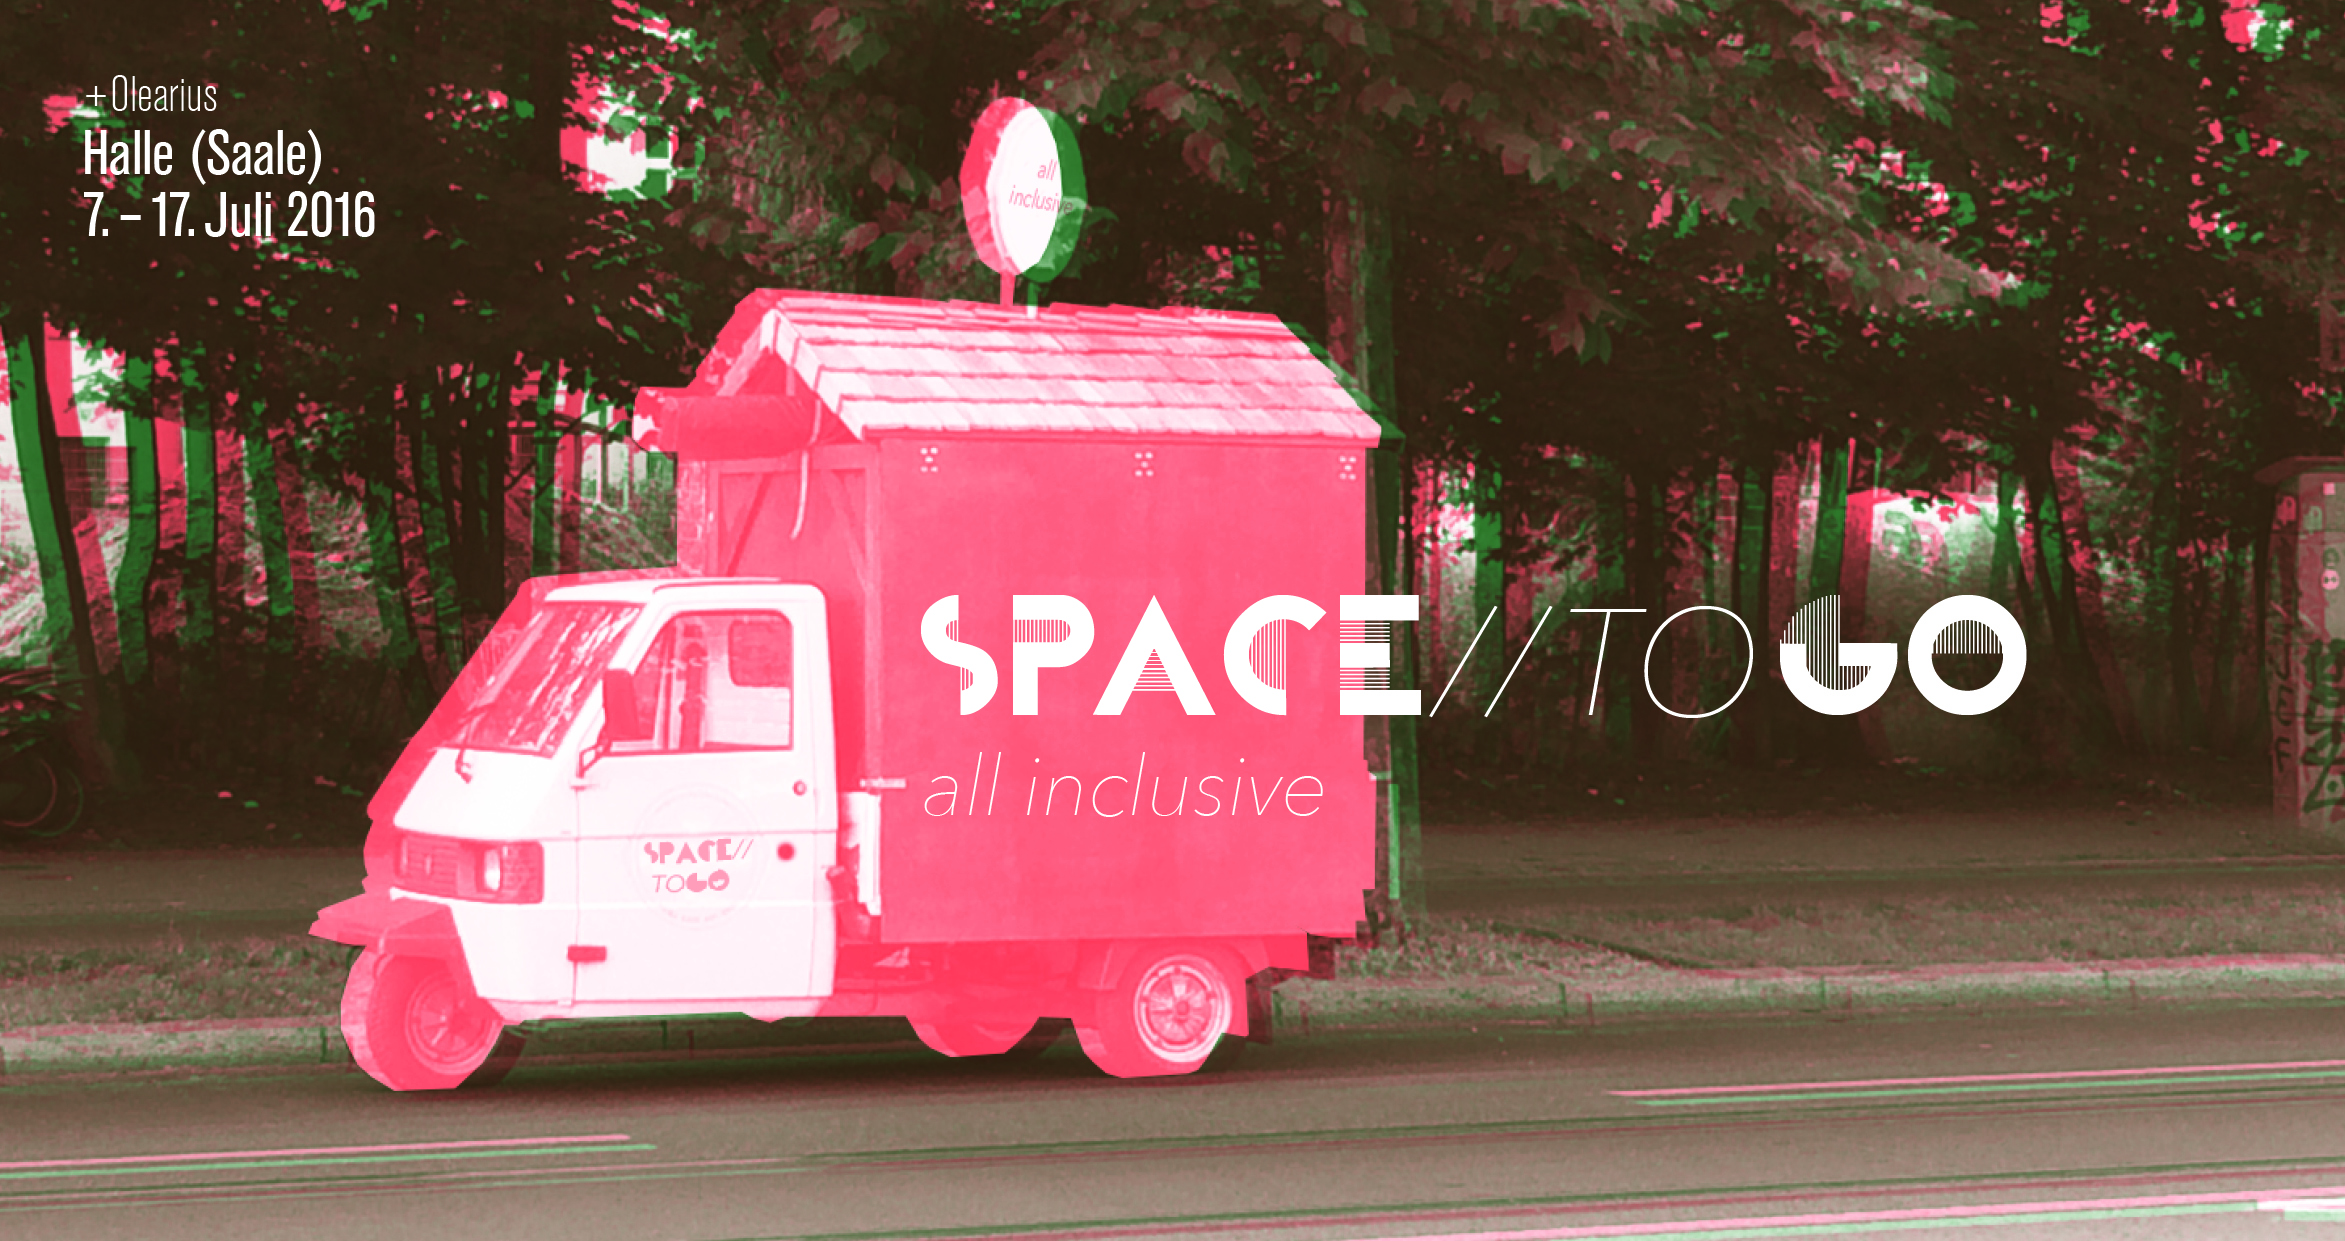 Space_TOGO_all inclusive_Einladung